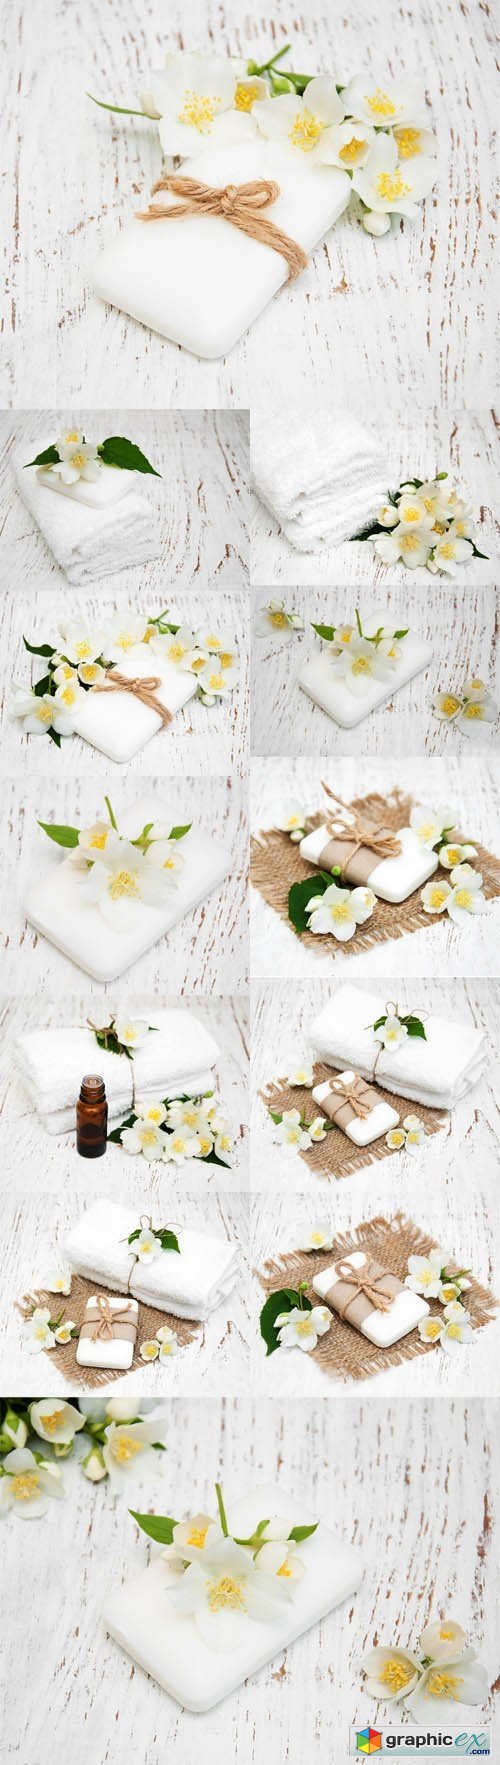 Photo Set - Jasmin Flowers and Soap